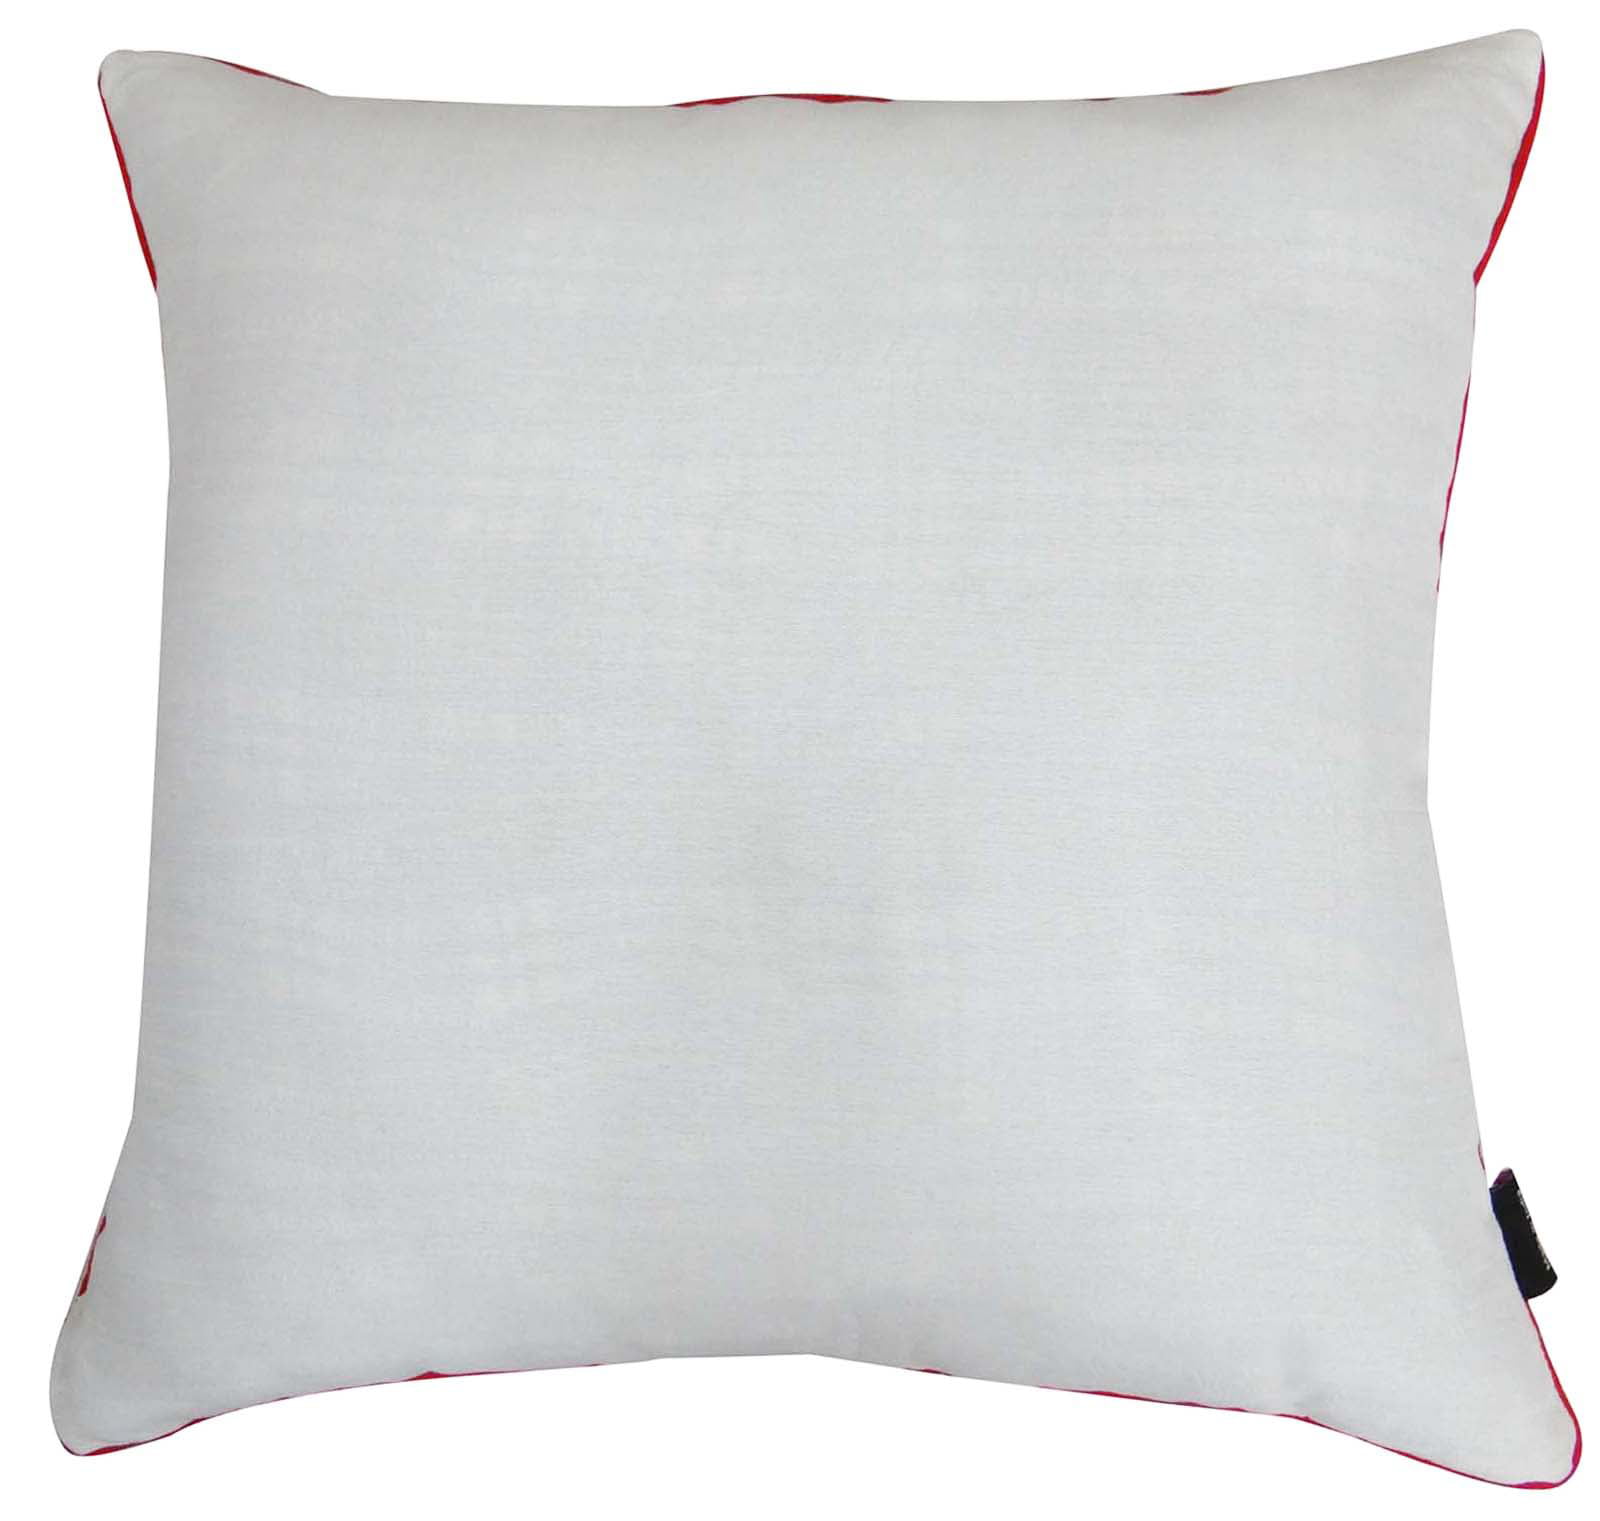 Dupion Silk Decorative Square Cushion Cover Sofa Throw Pillow Case-Light Blue 